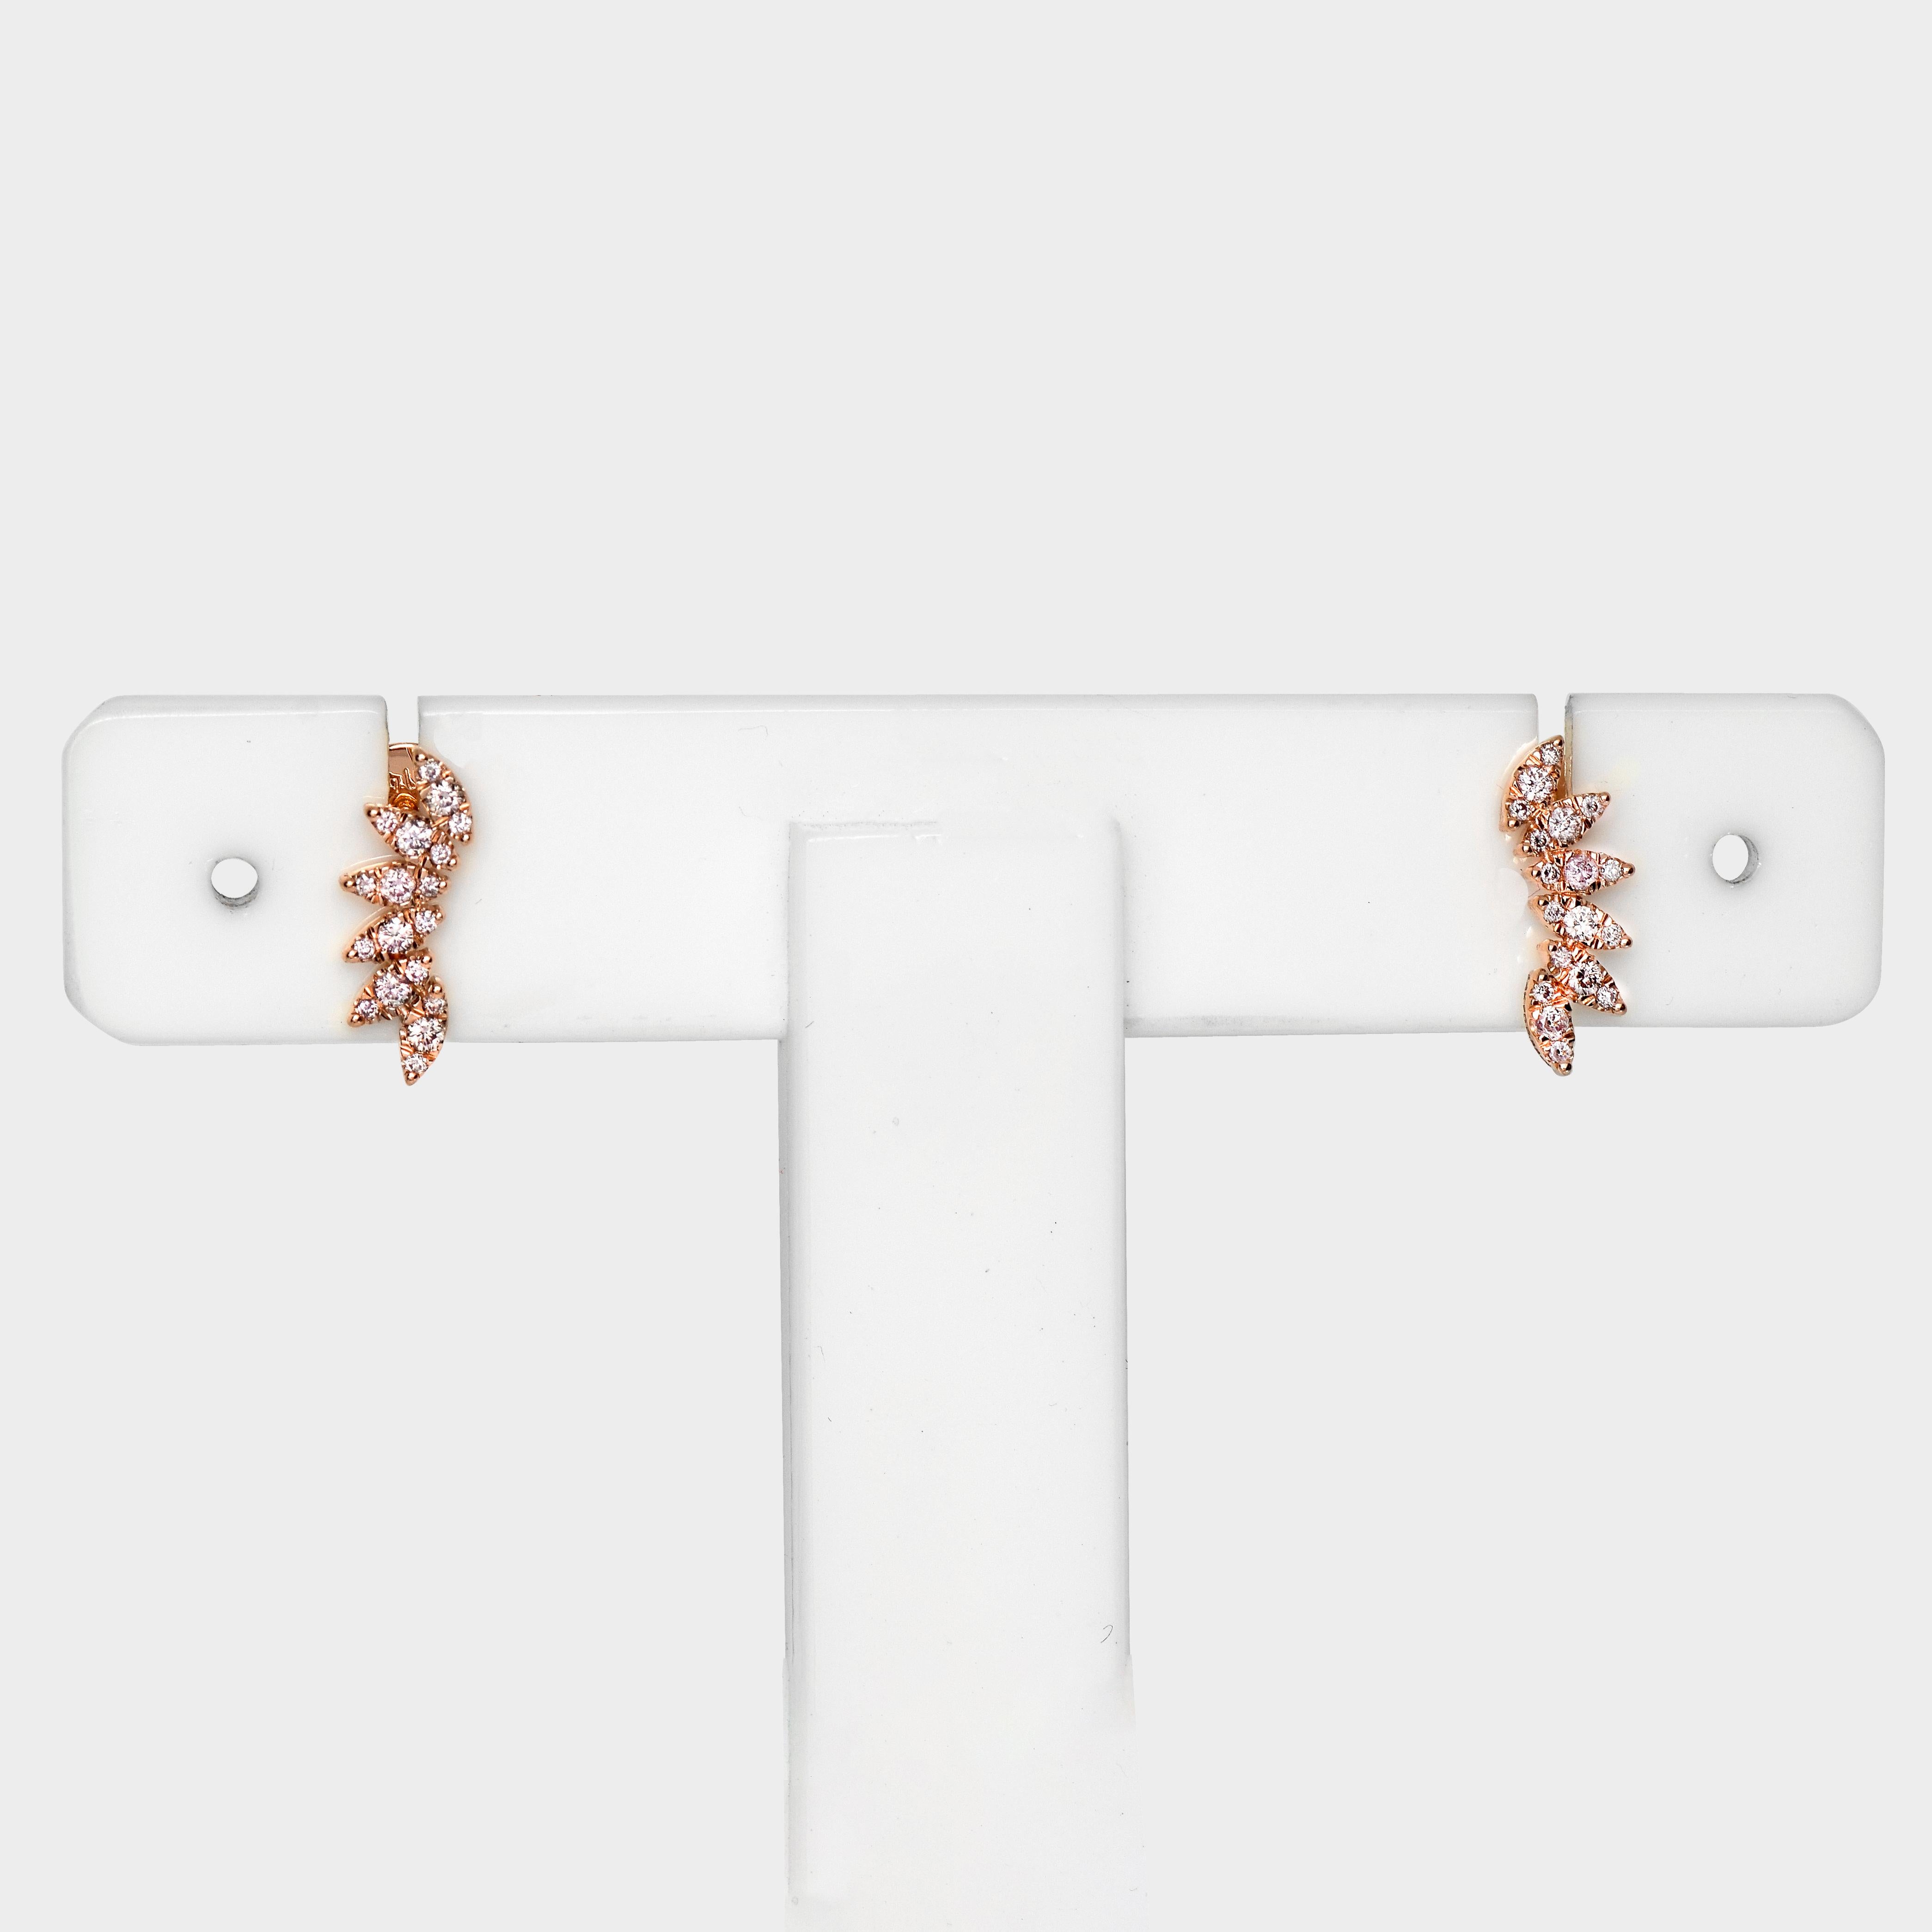 Round Cut IGI 14K 0.33 ct Natural Pink Diamonds Art Deco Design Stud Earrings For Sale